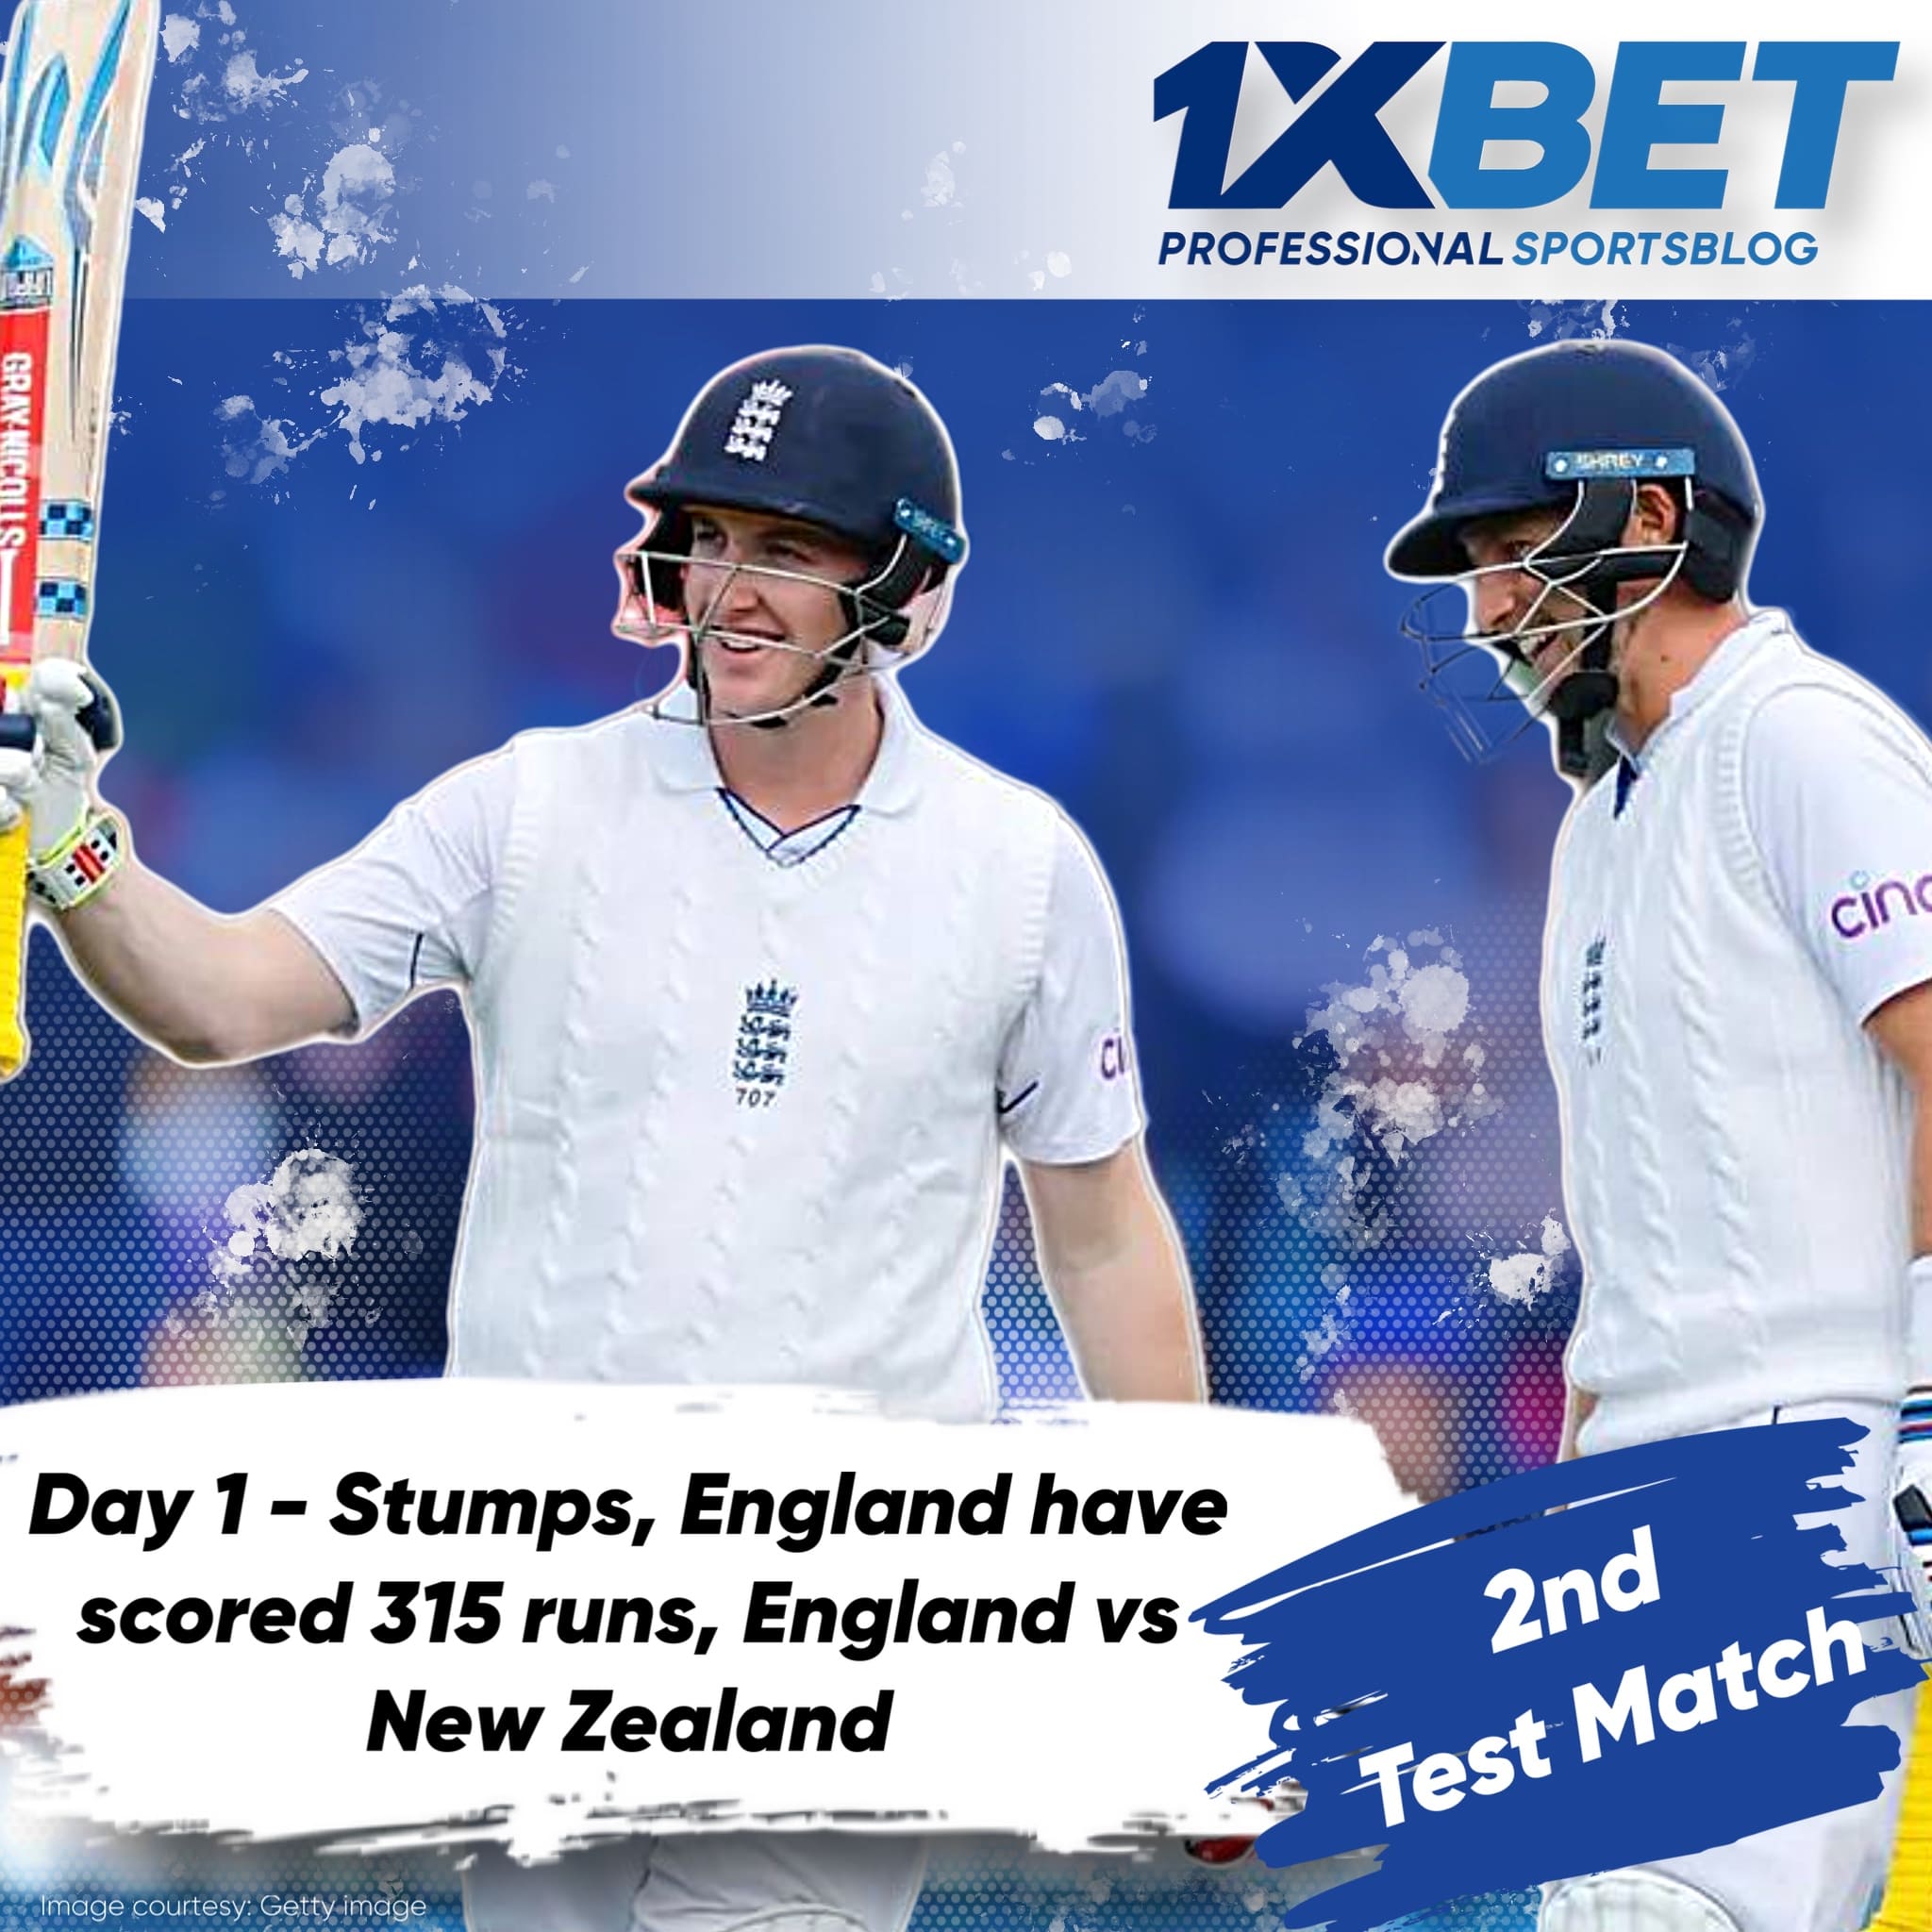 Day 1 - Stumps, England have scored 315 runs